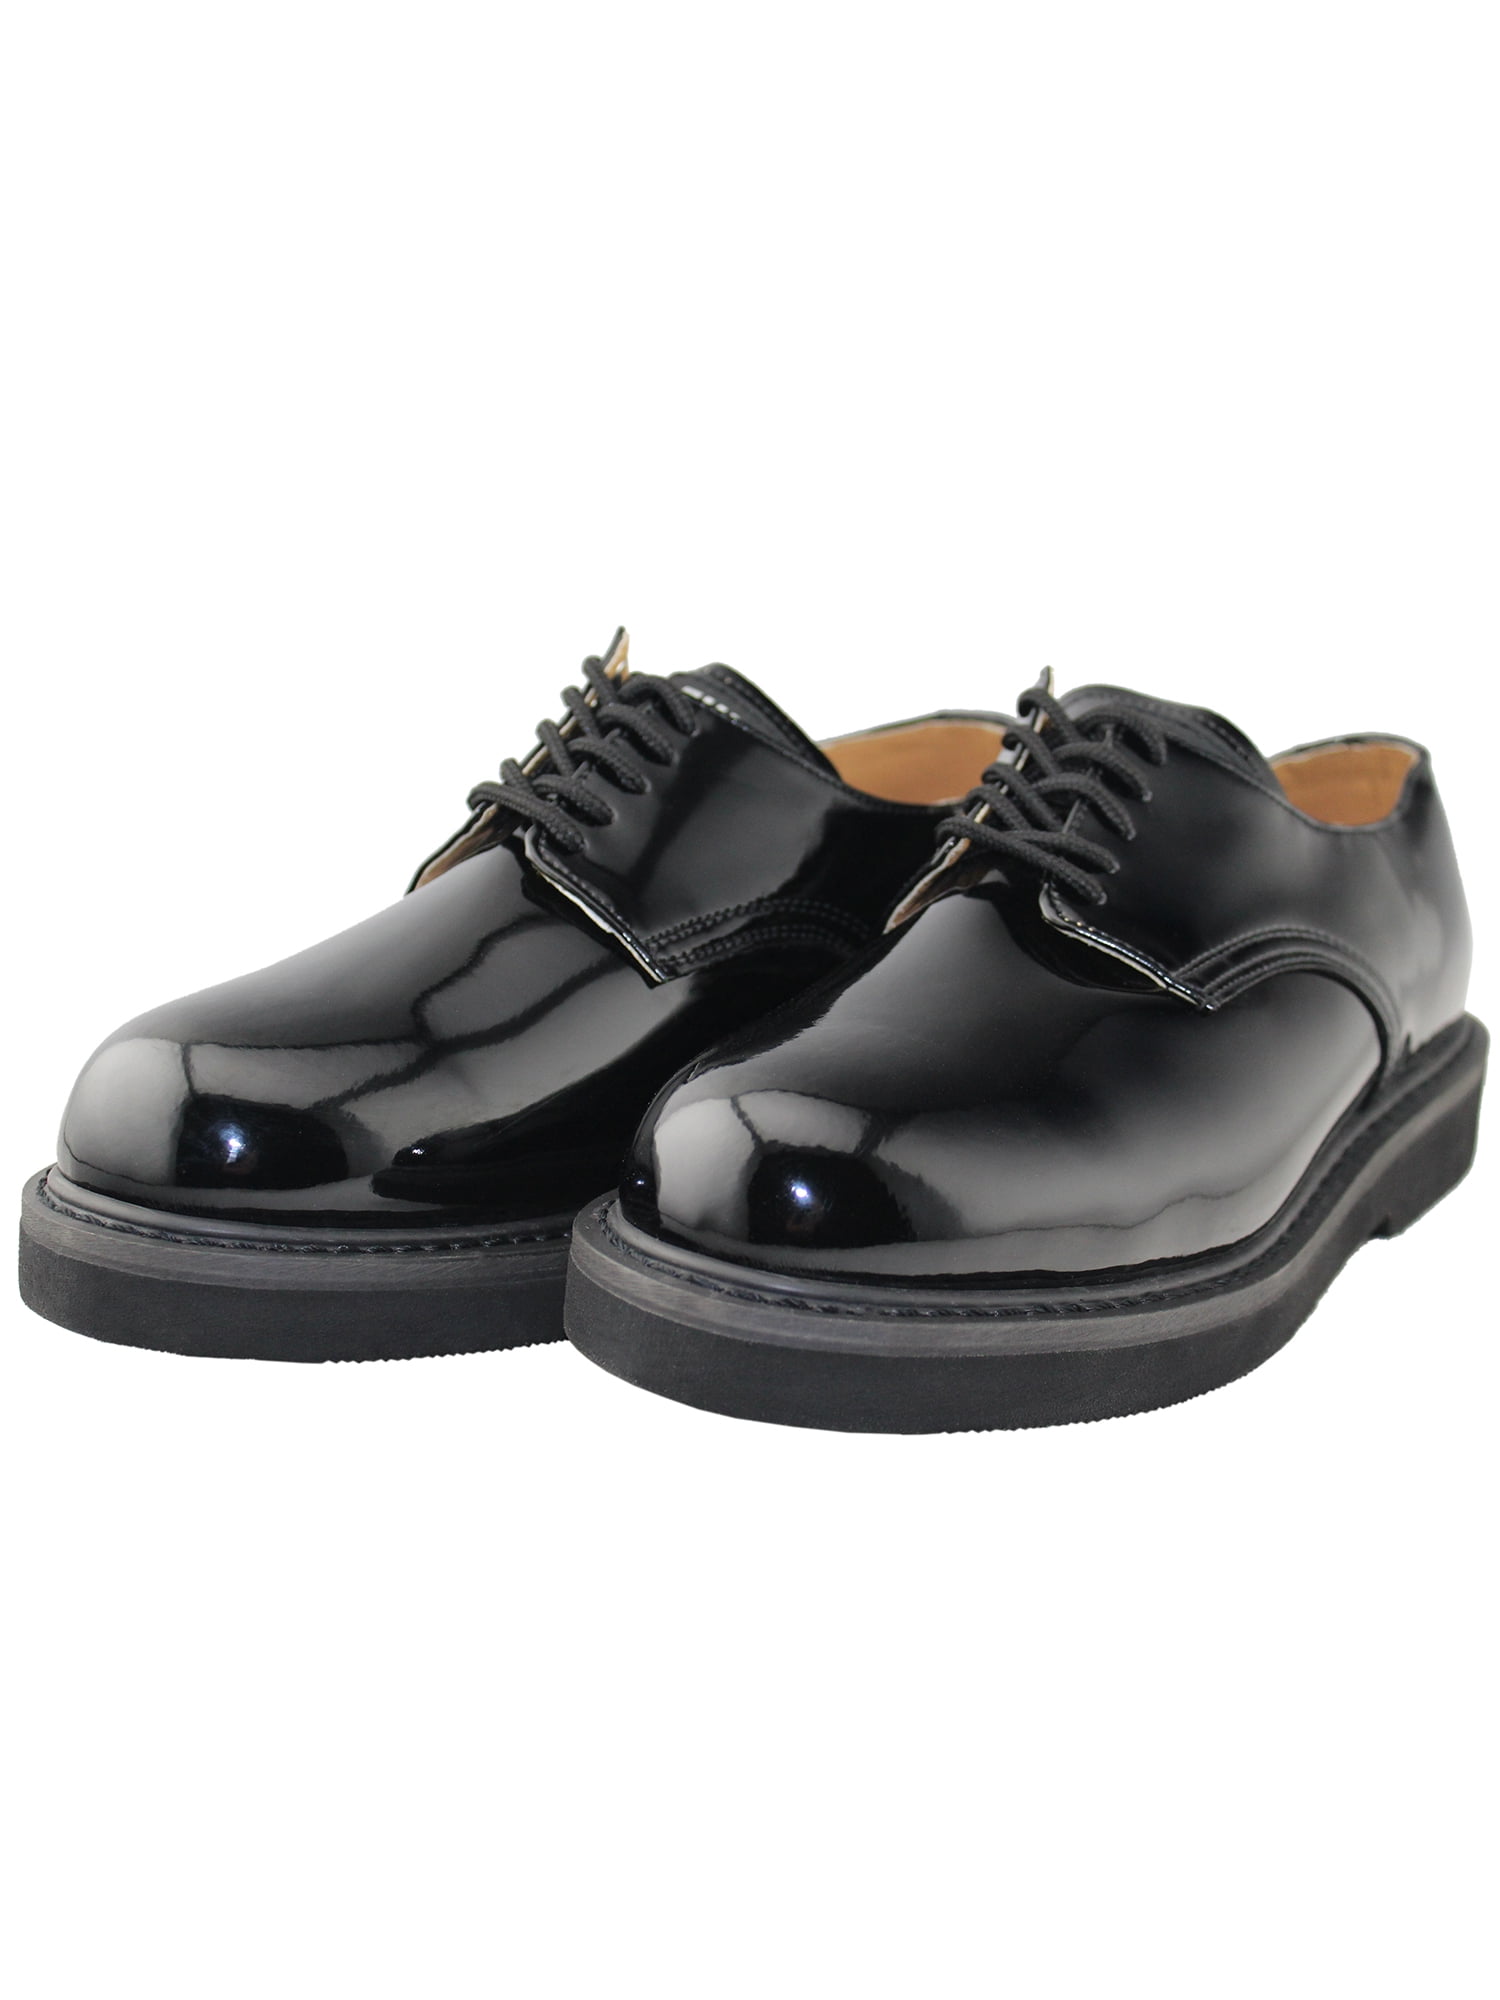 Men Oxford Leather Shoes Dress Shoes 